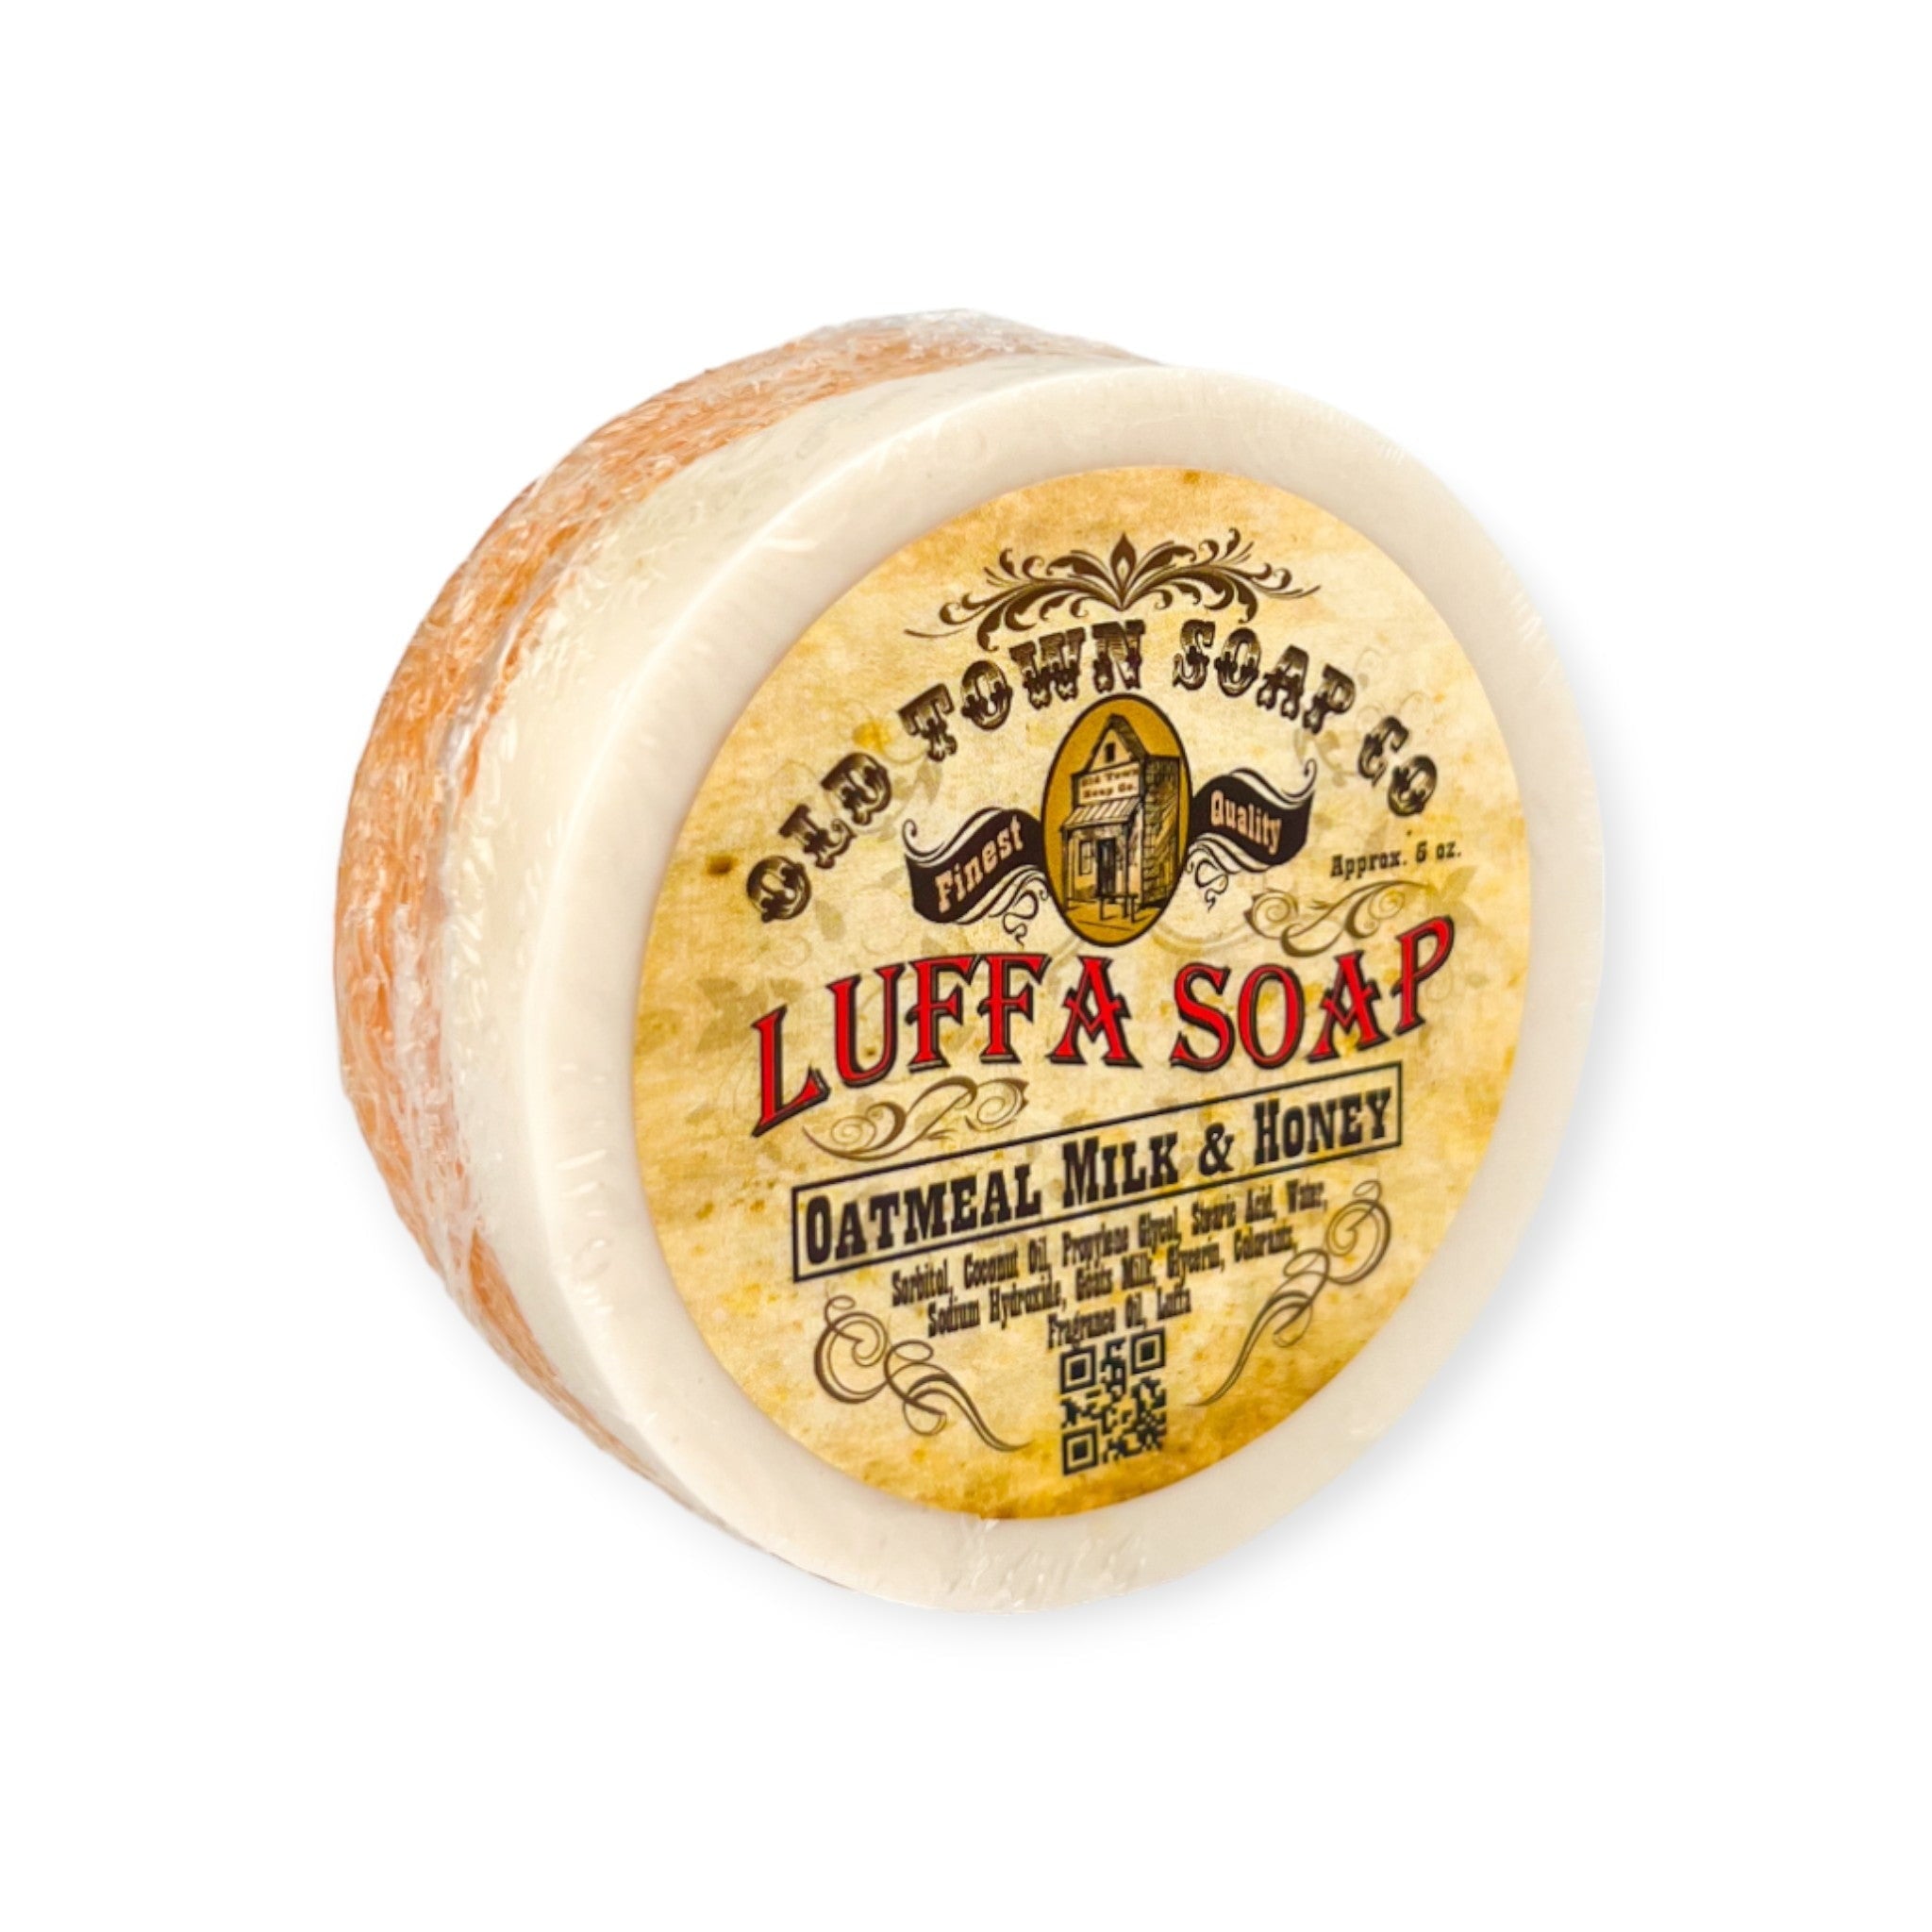 Oatmeal Milk &amp; Honey -Luffa Soap - Old Town Soap Co.